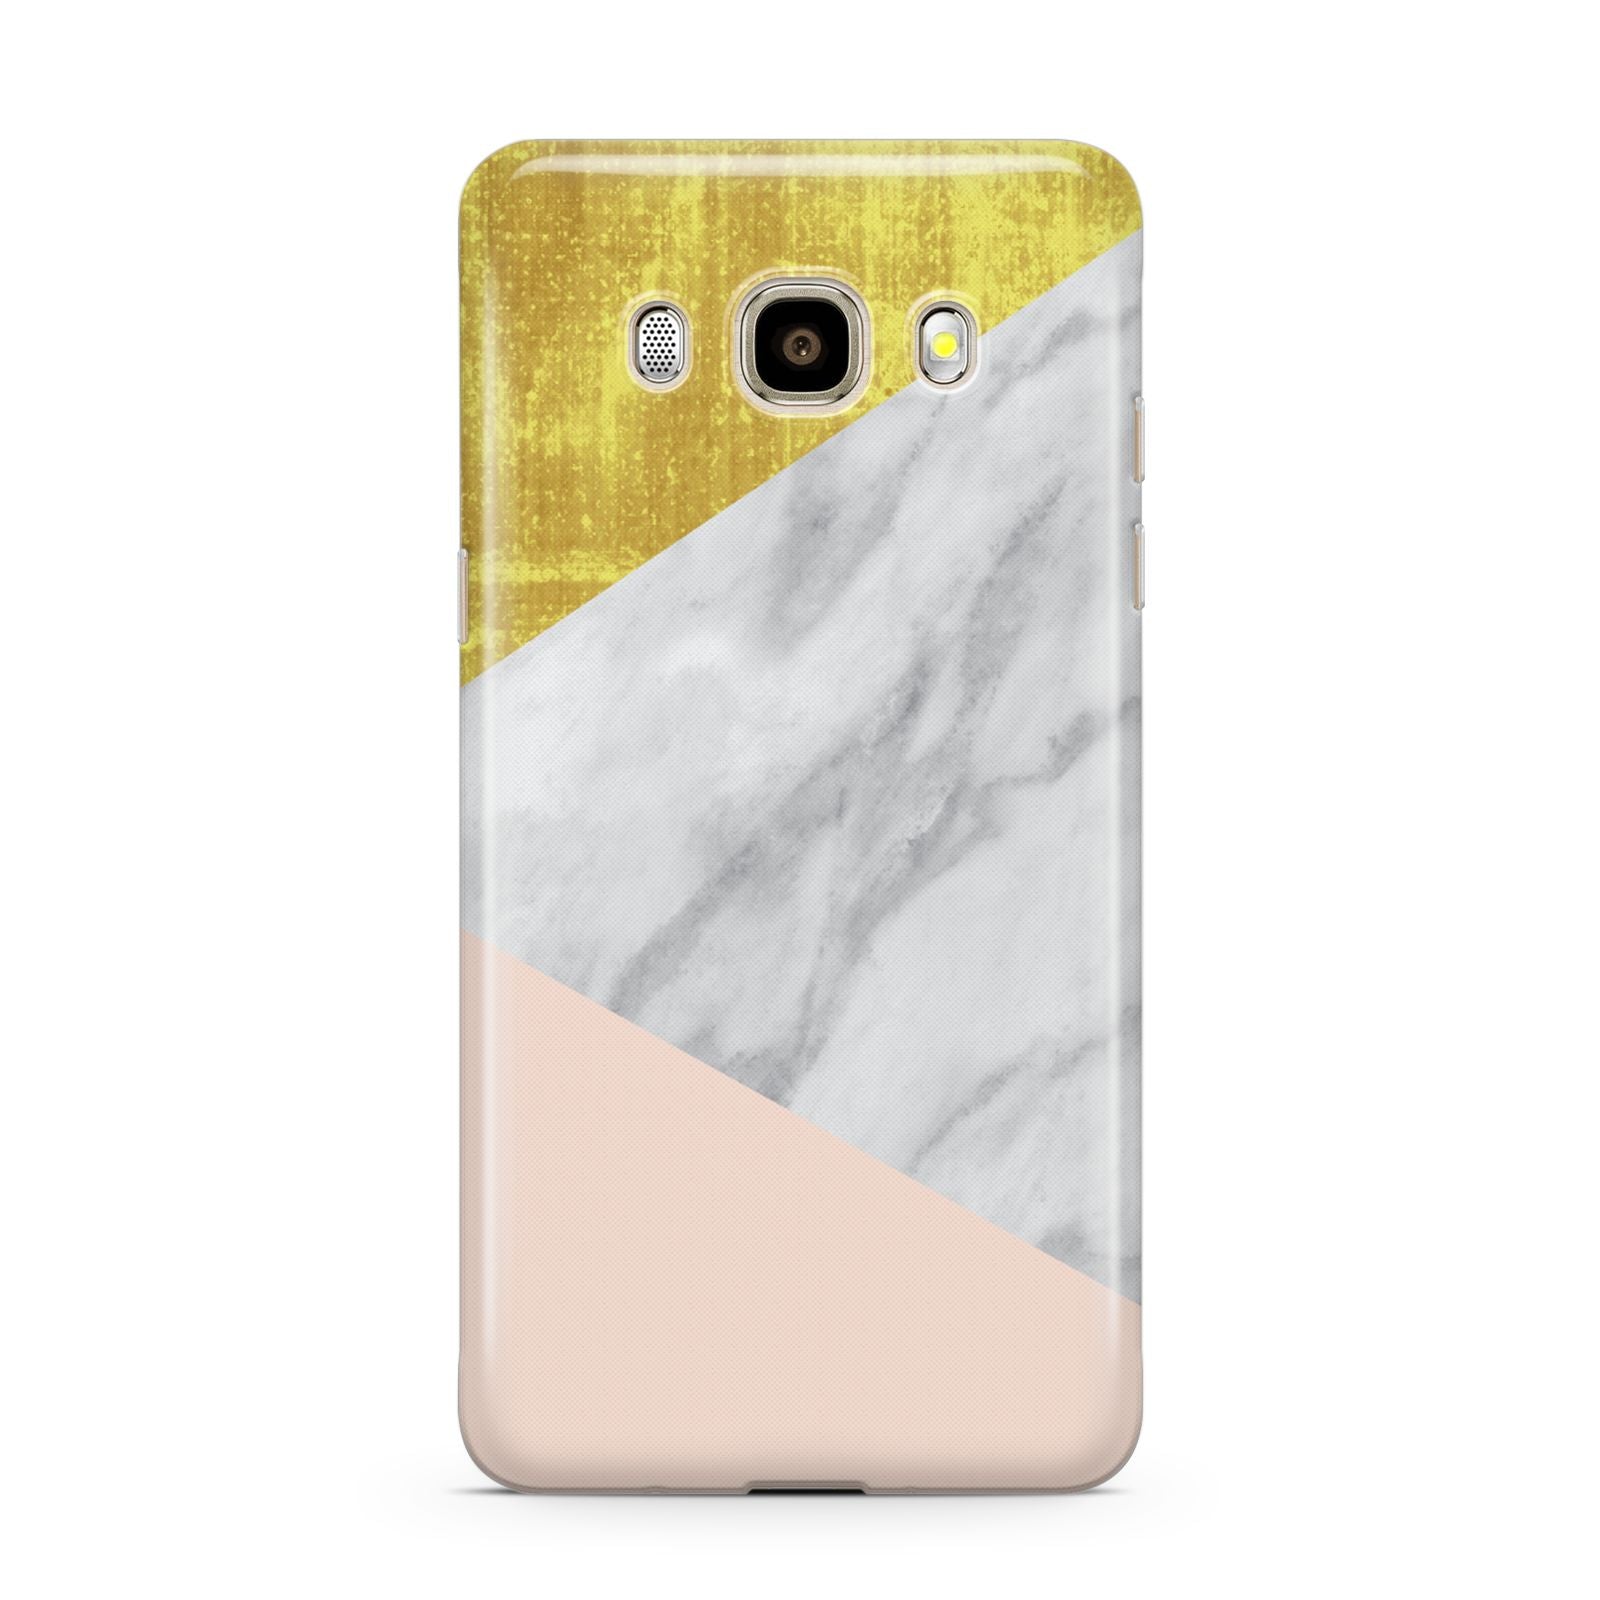 Marble White Gold Foil Peach Samsung Galaxy J7 2016 Case on gold phone